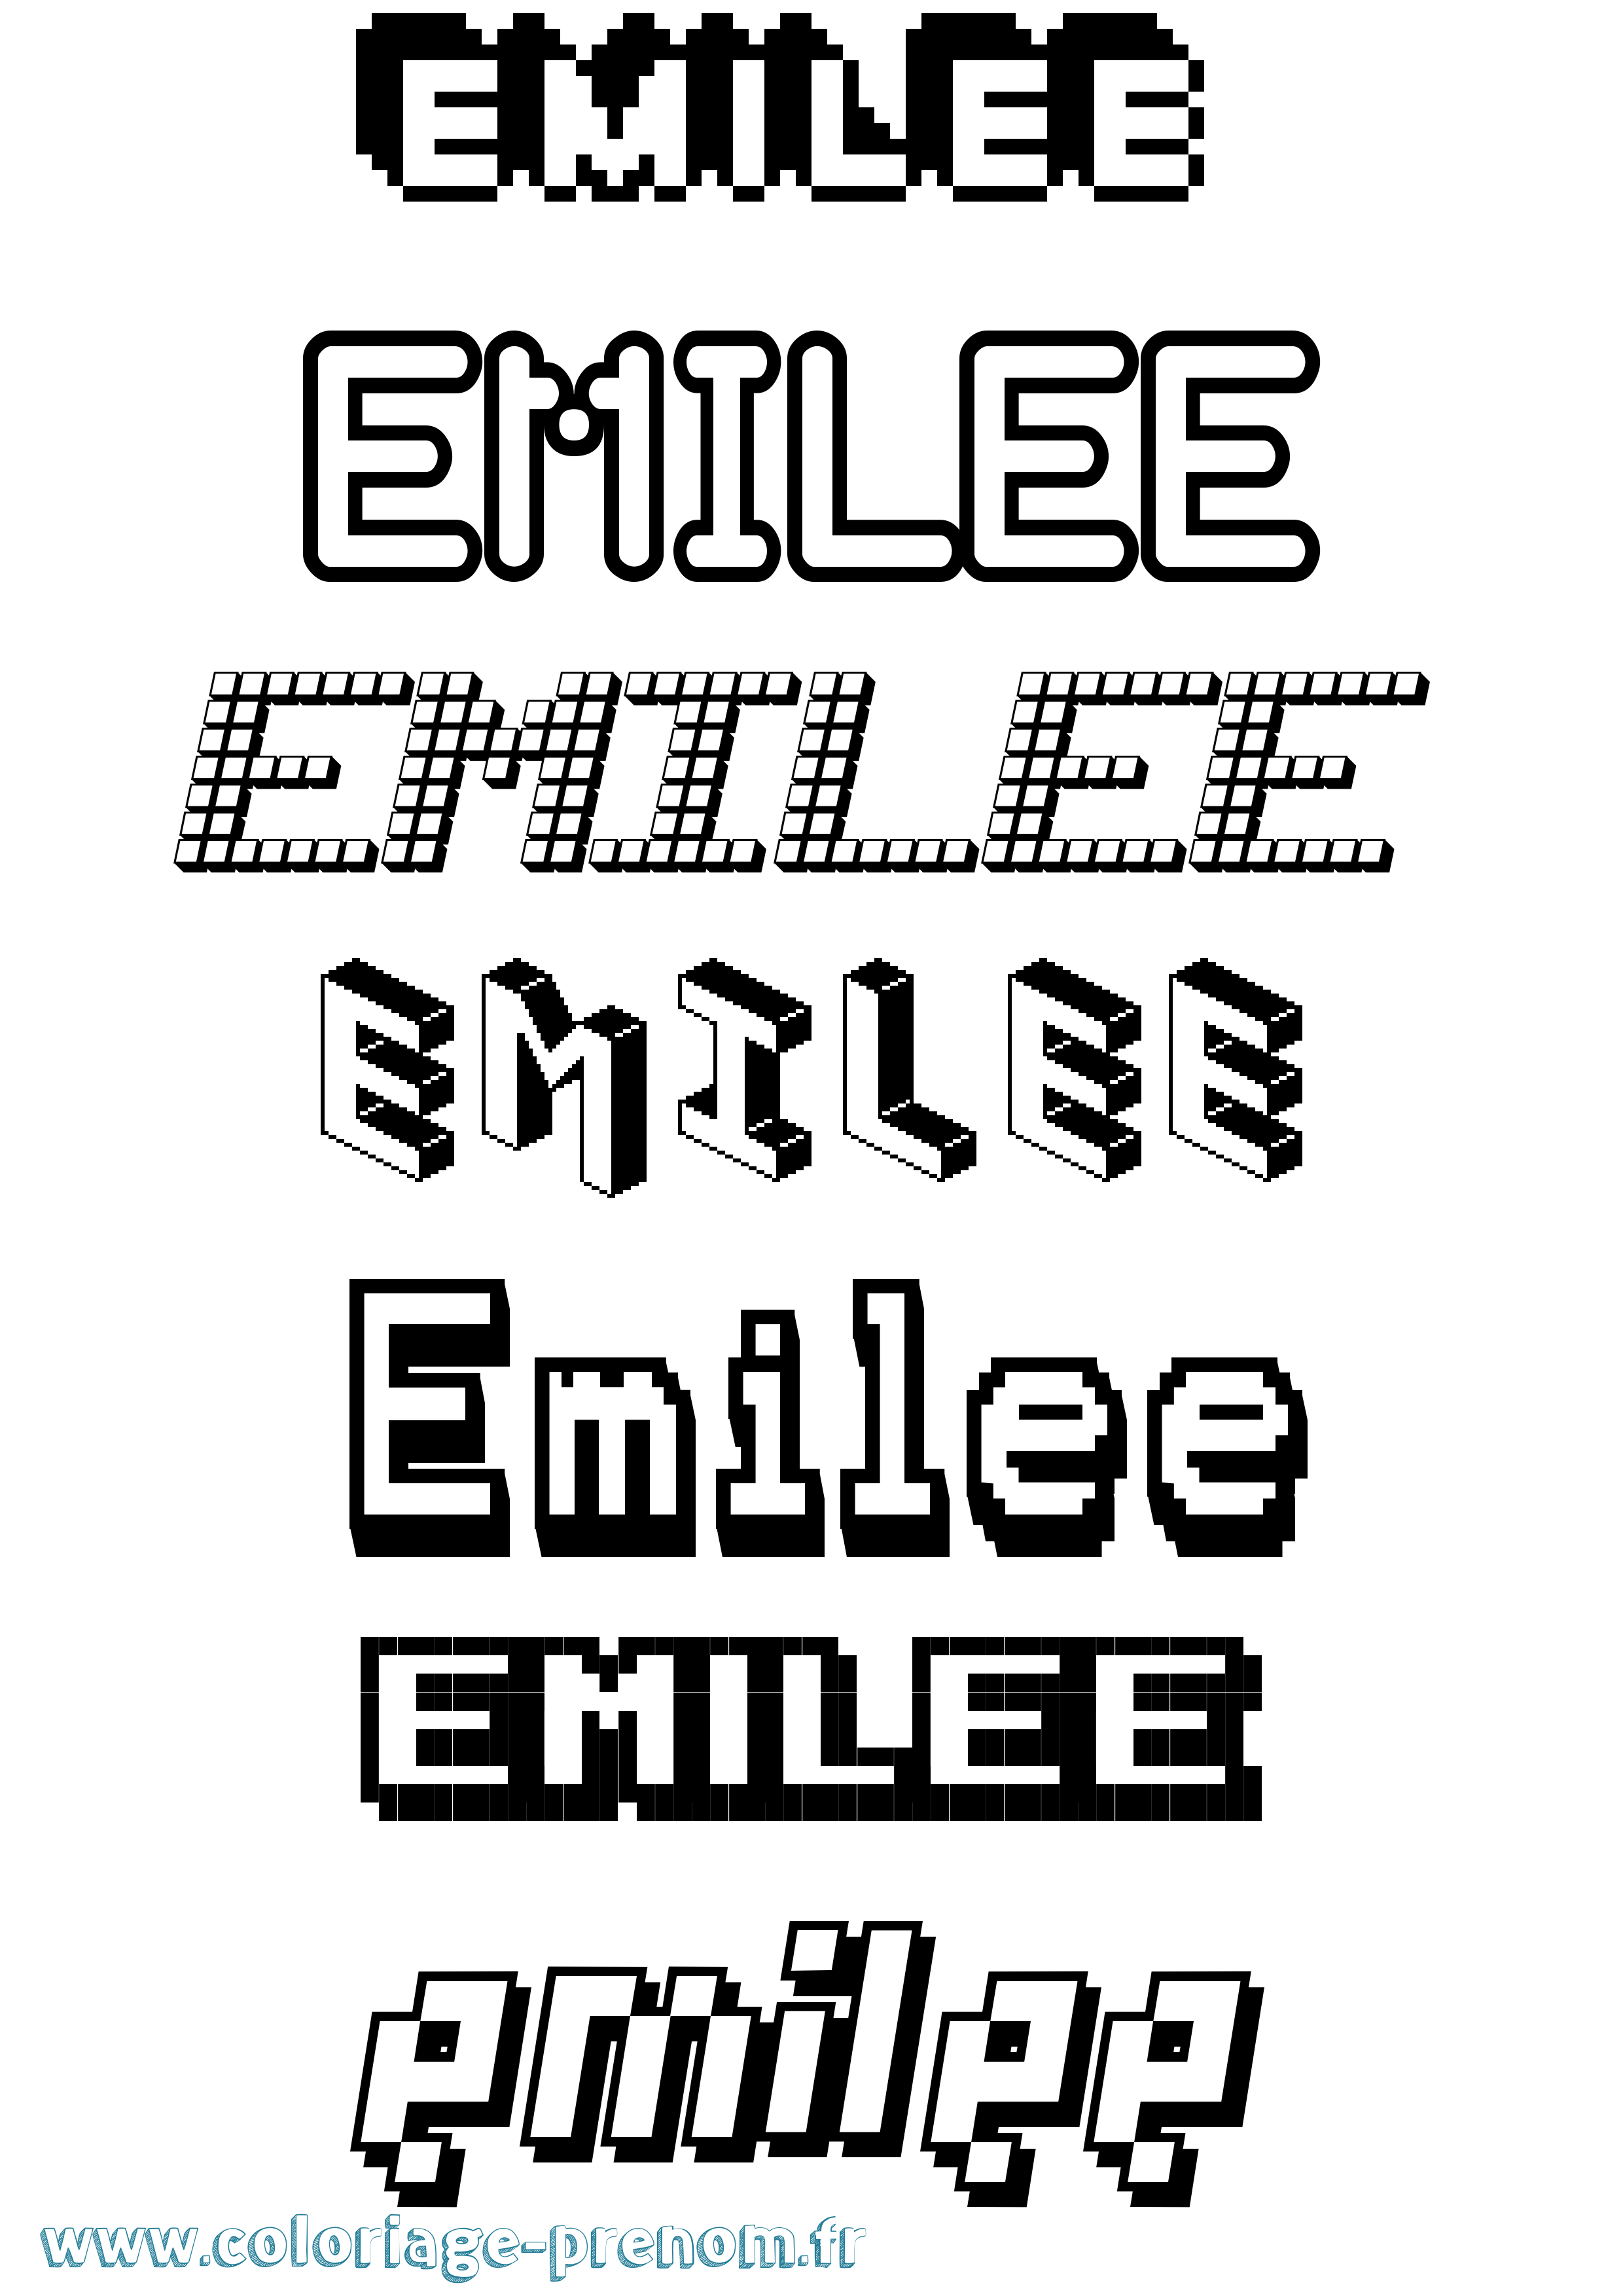 Coloriage prénom Emilee Pixel